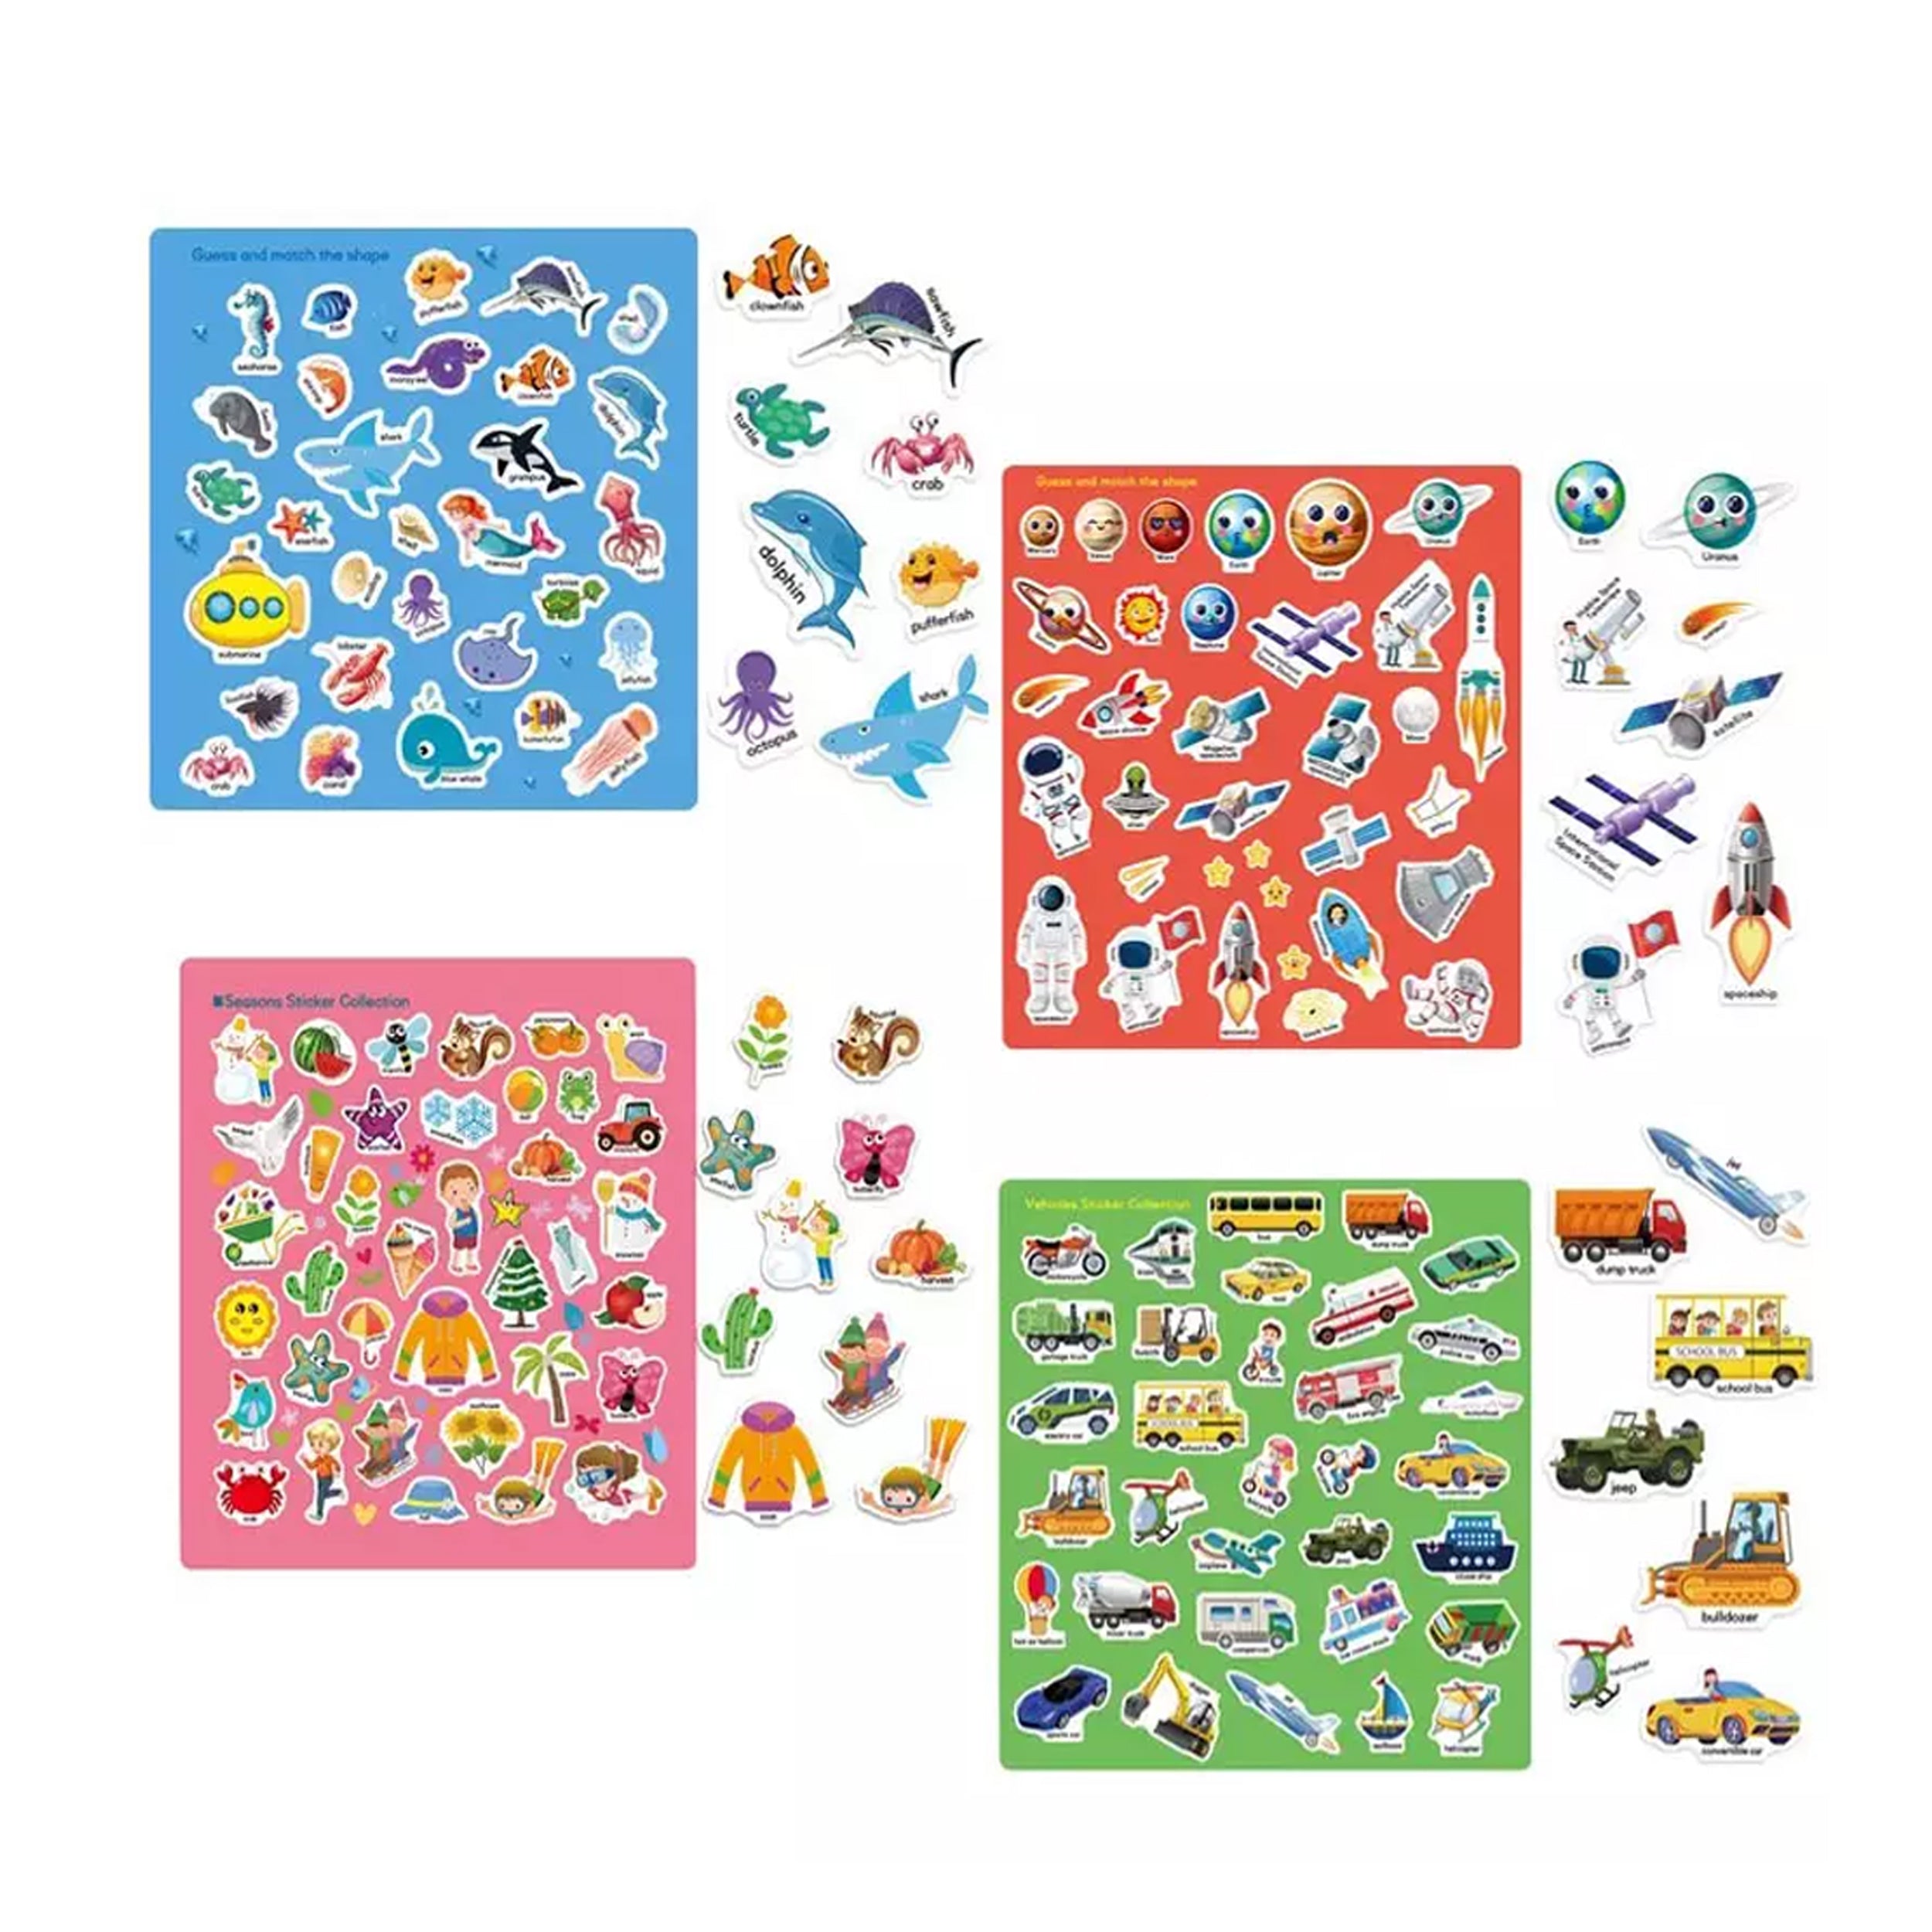 New Children Scene Stickers DIY Hand On Puzzle - Create Your Own Fun and Imaginative Scenes